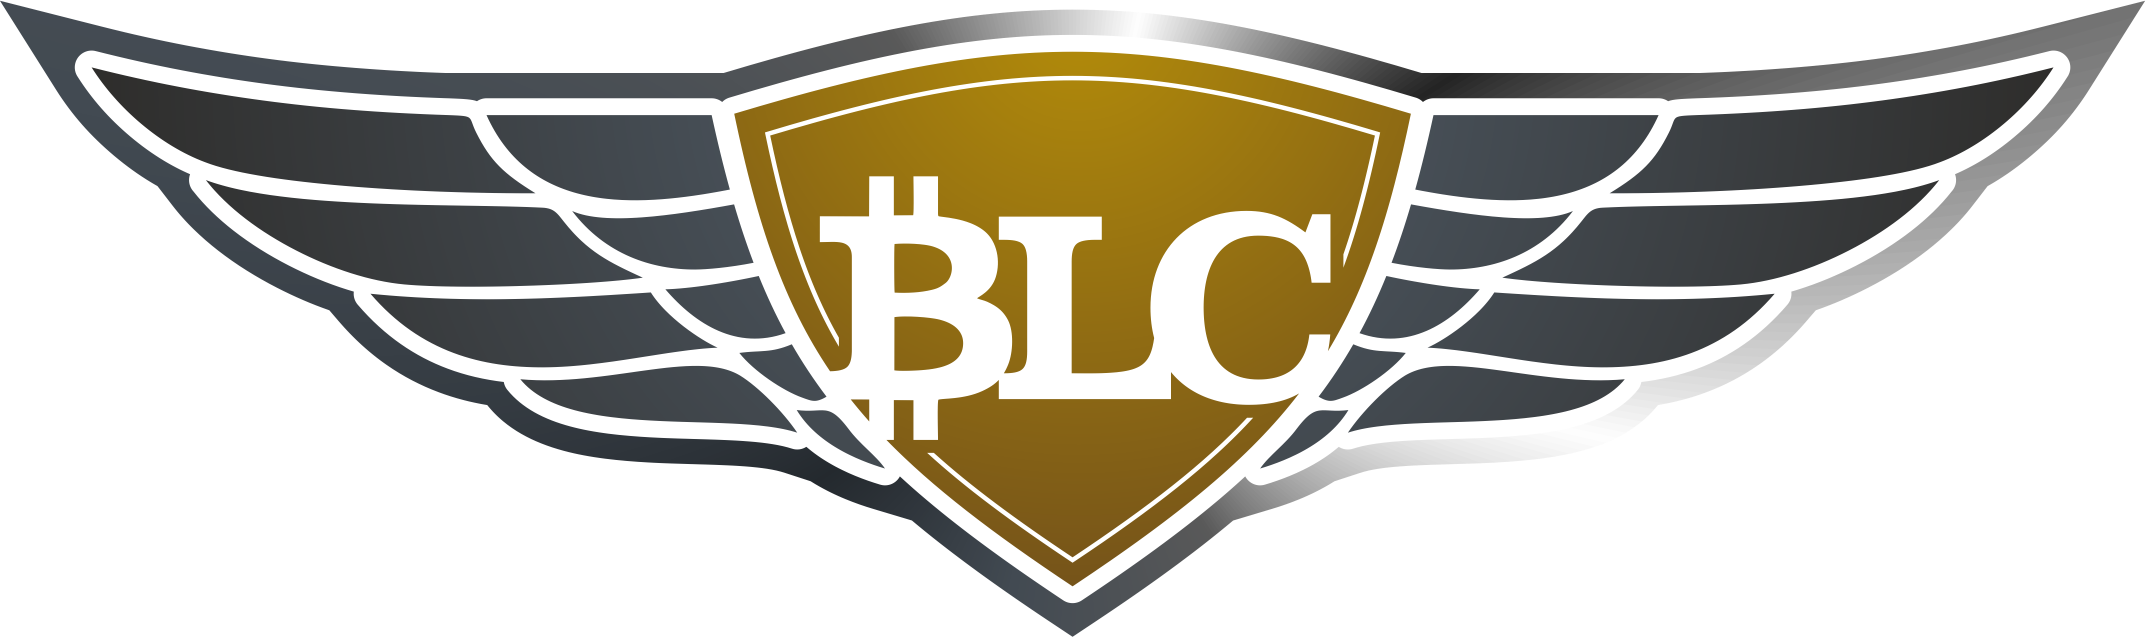 Bitcoin Lifestyles Club